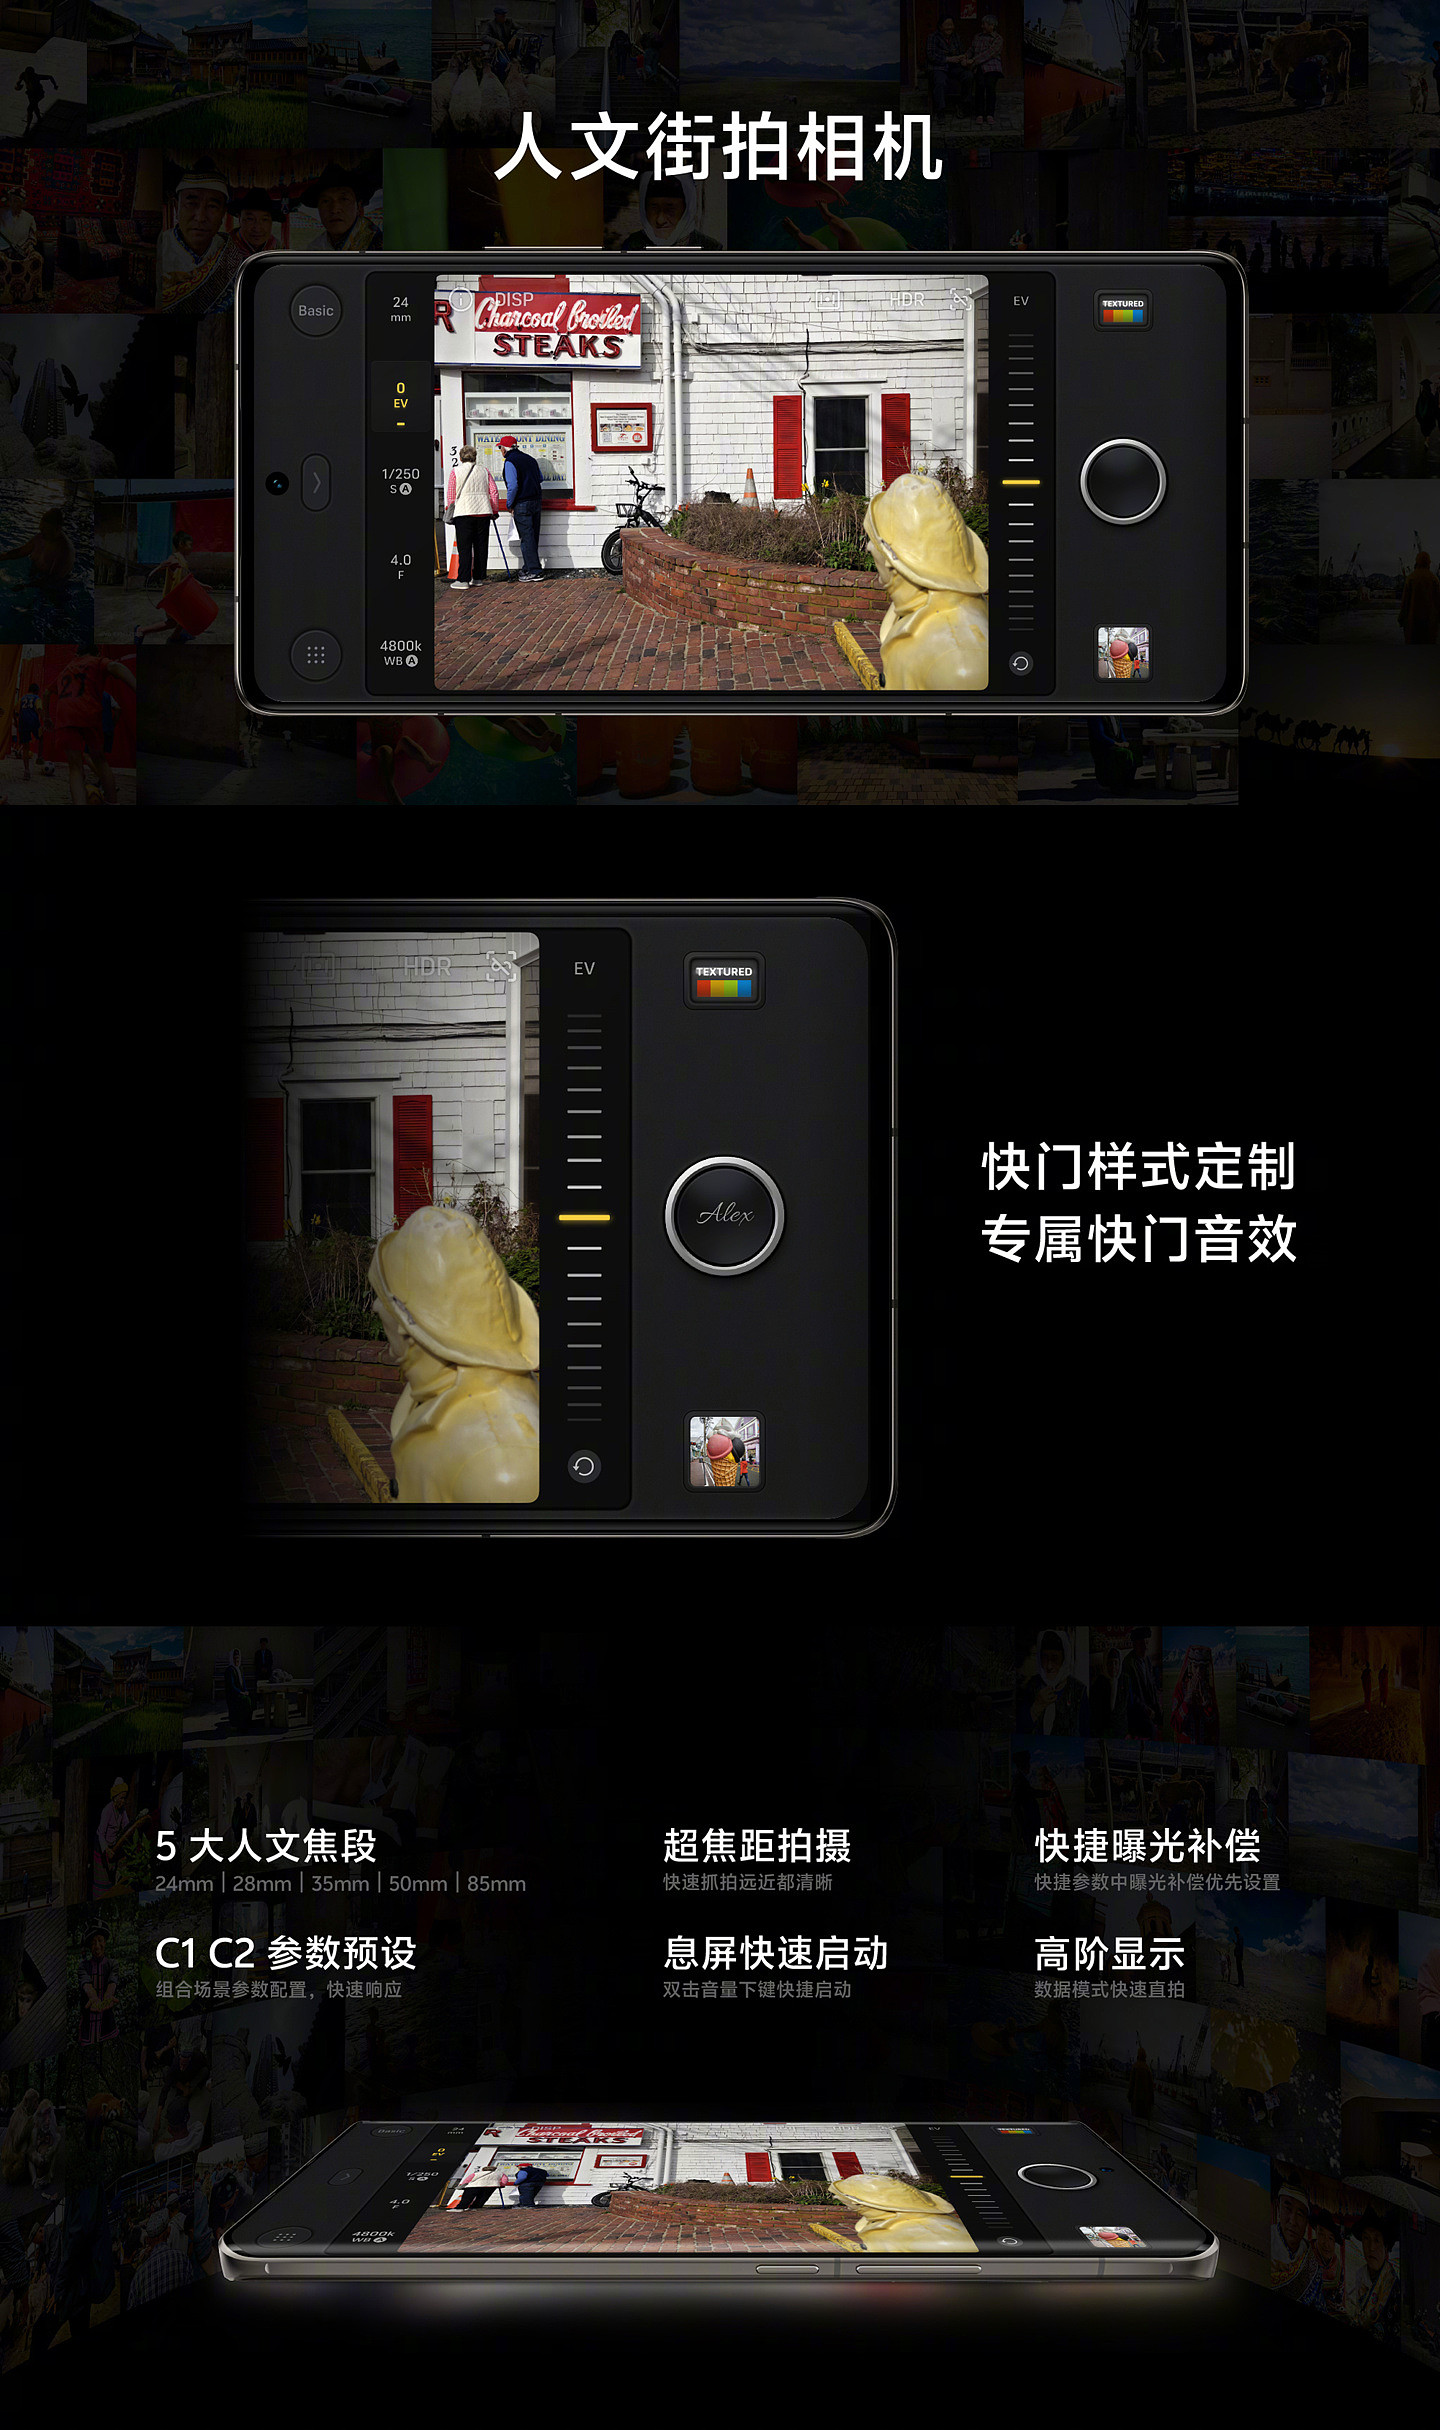 vivo X100 Ultra 发布：官方称“买相机送手机”，售价 6499 元起 - 13